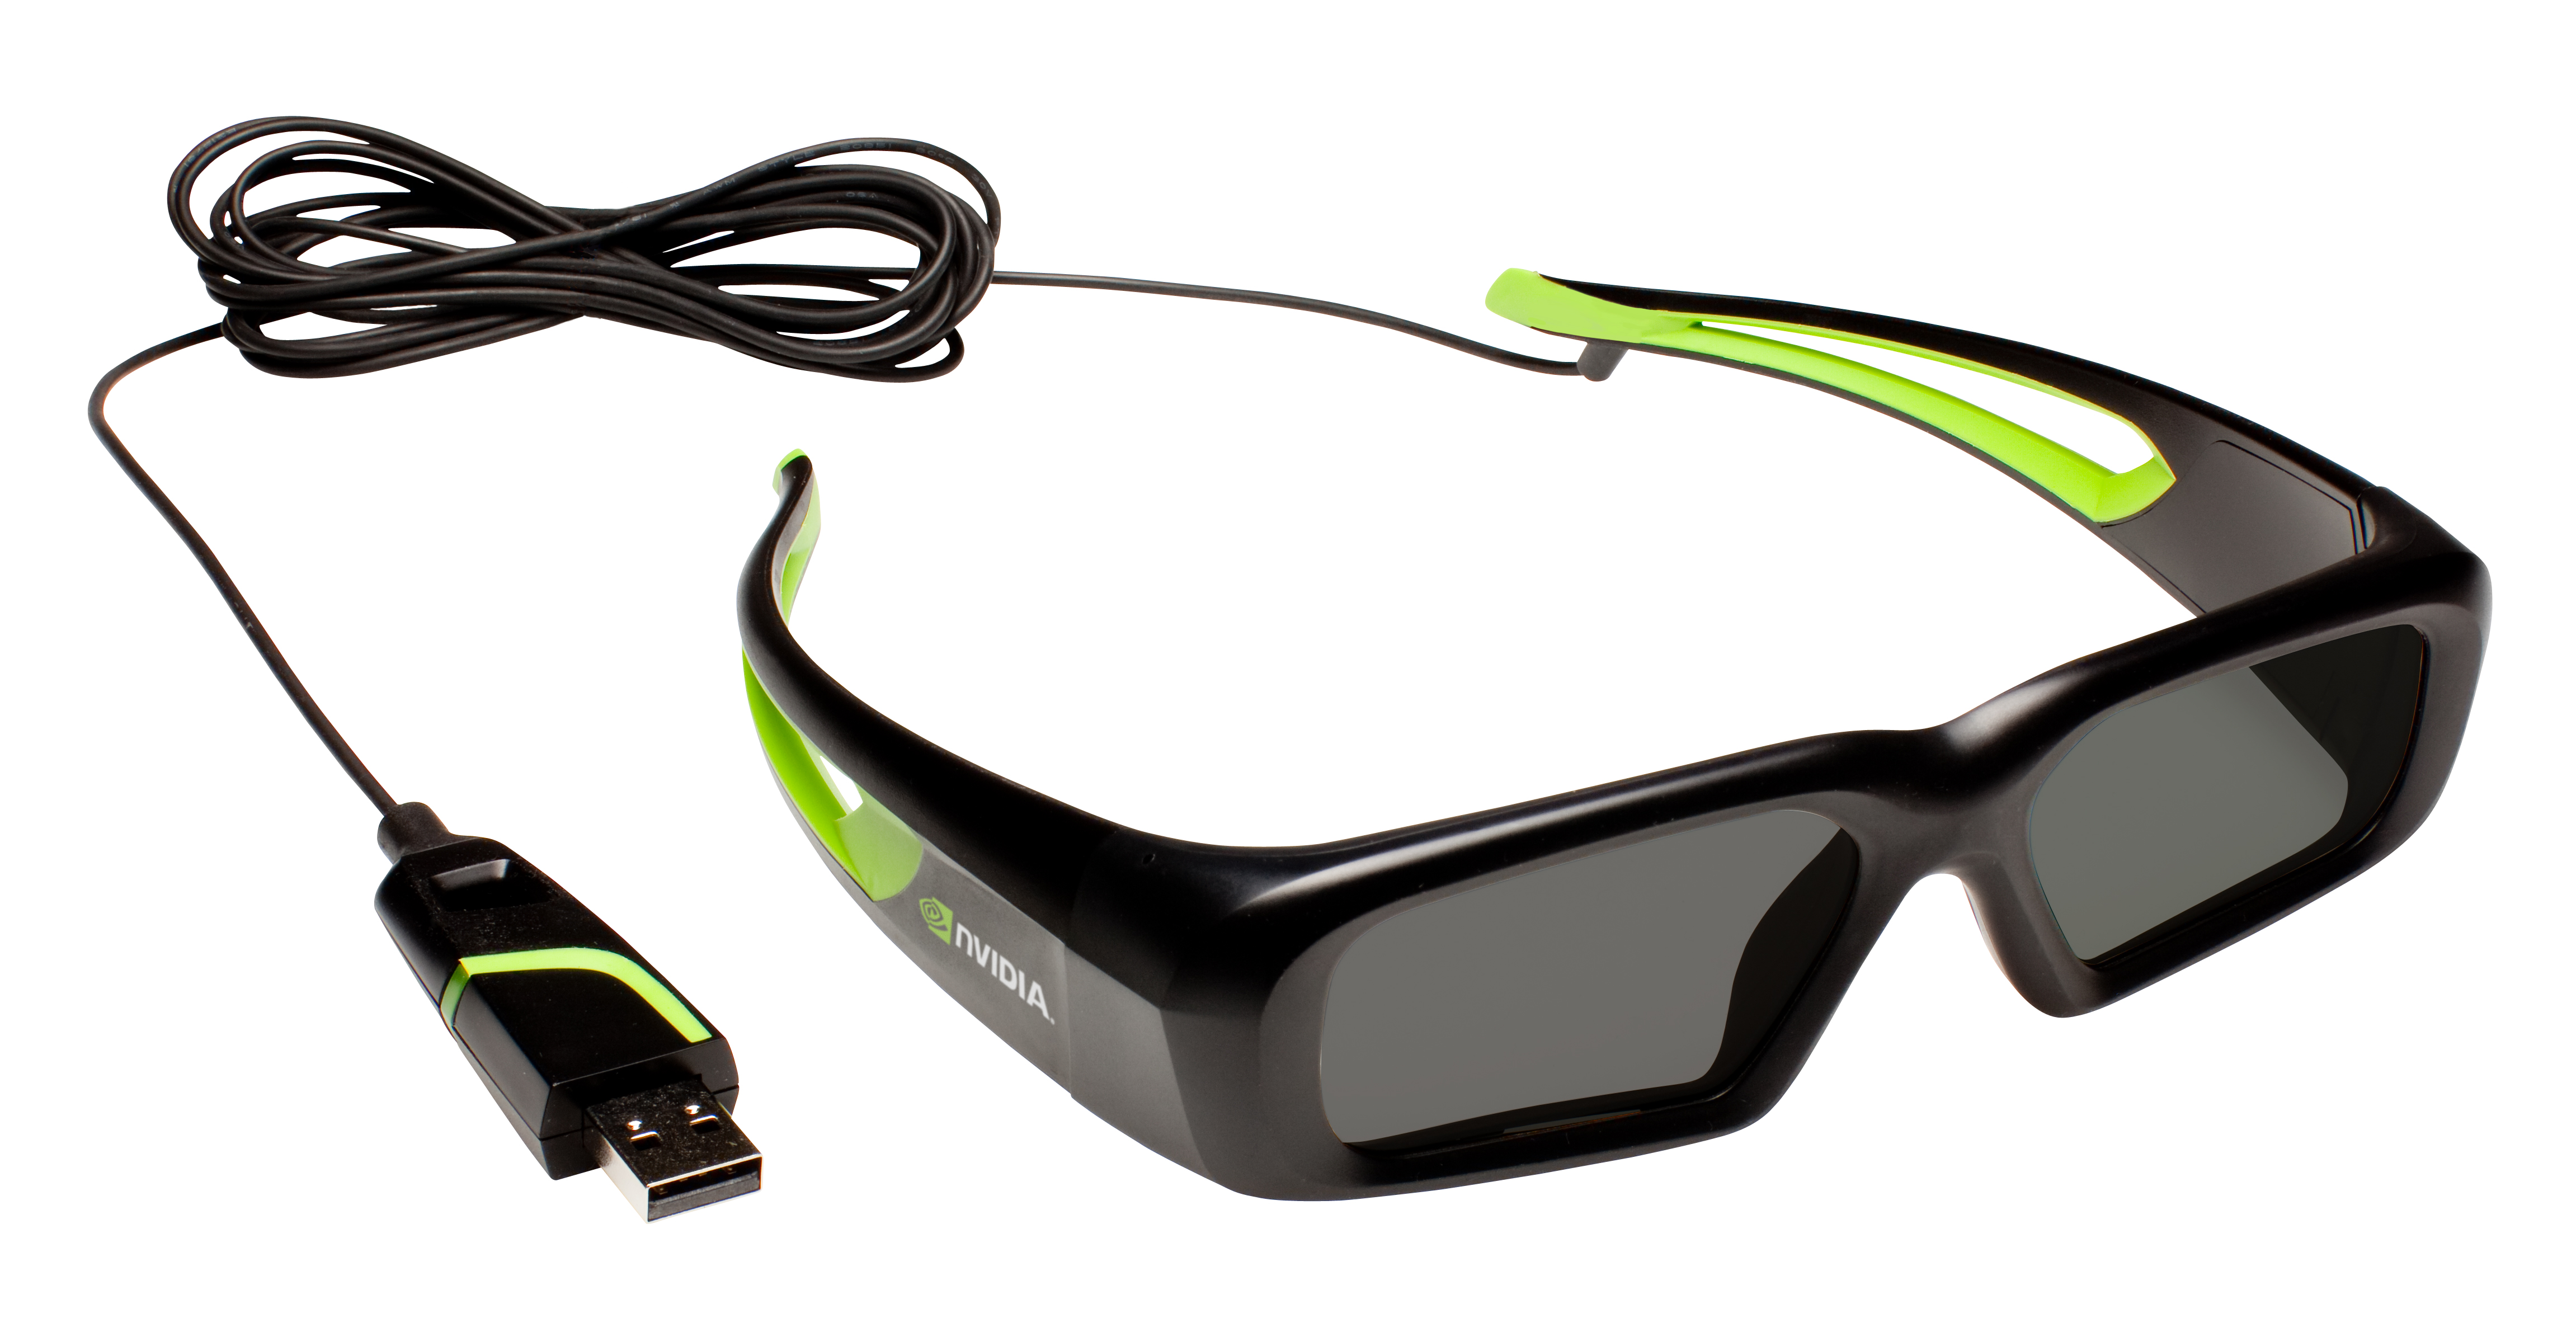 Nvidia 3d игры. NVIDIA 3d очки Vision Glasses. 3d очки NVIDIA 3d Vision. Очки NVIDIA 3d Vision USB Kit. NVIDIA 3d Vision монитор.